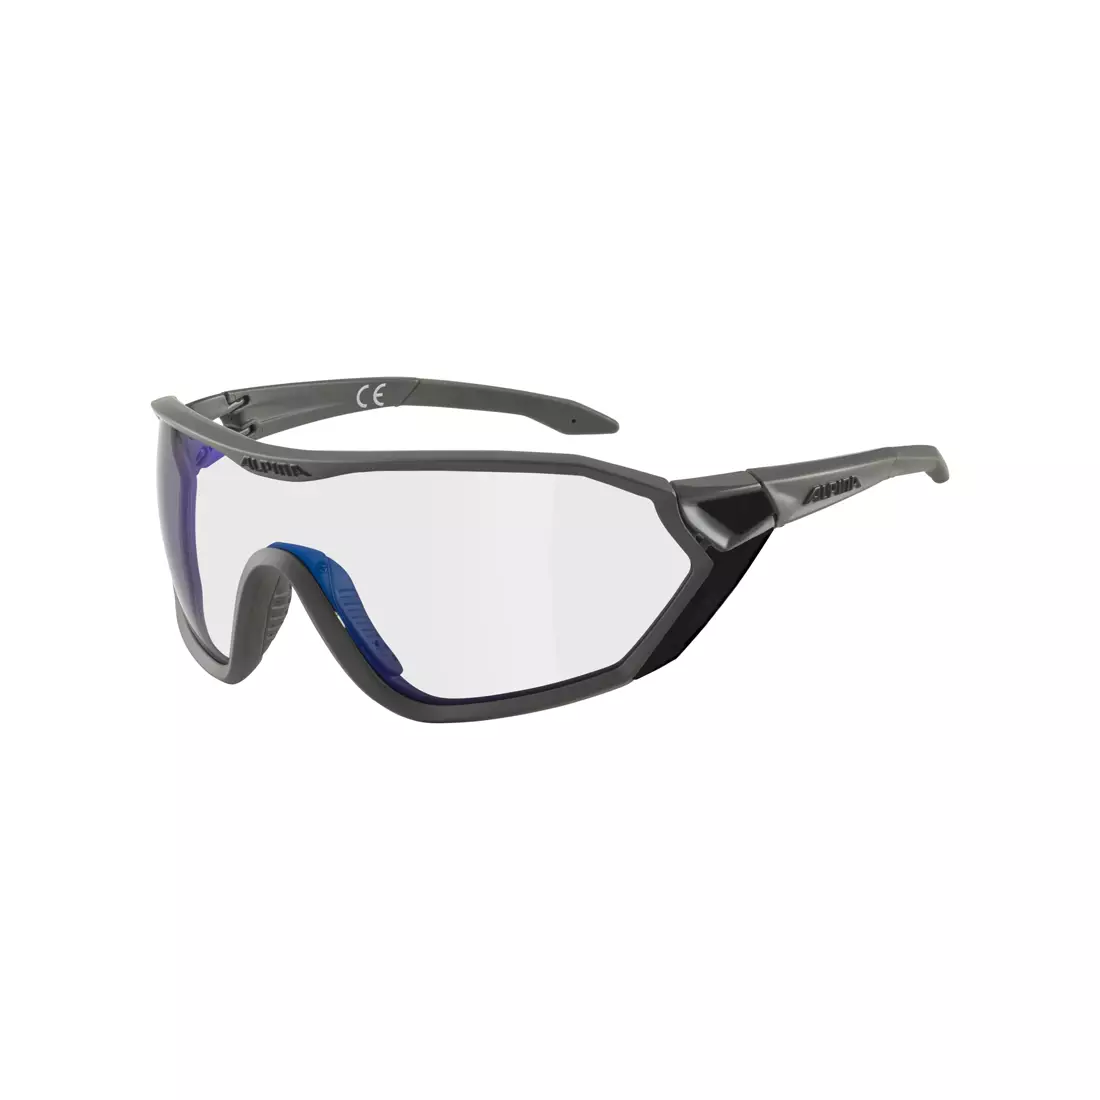 ALPINA S-WAY VM Sportovní fotochromatické brýle, moon-grey matt, blue mirrorr